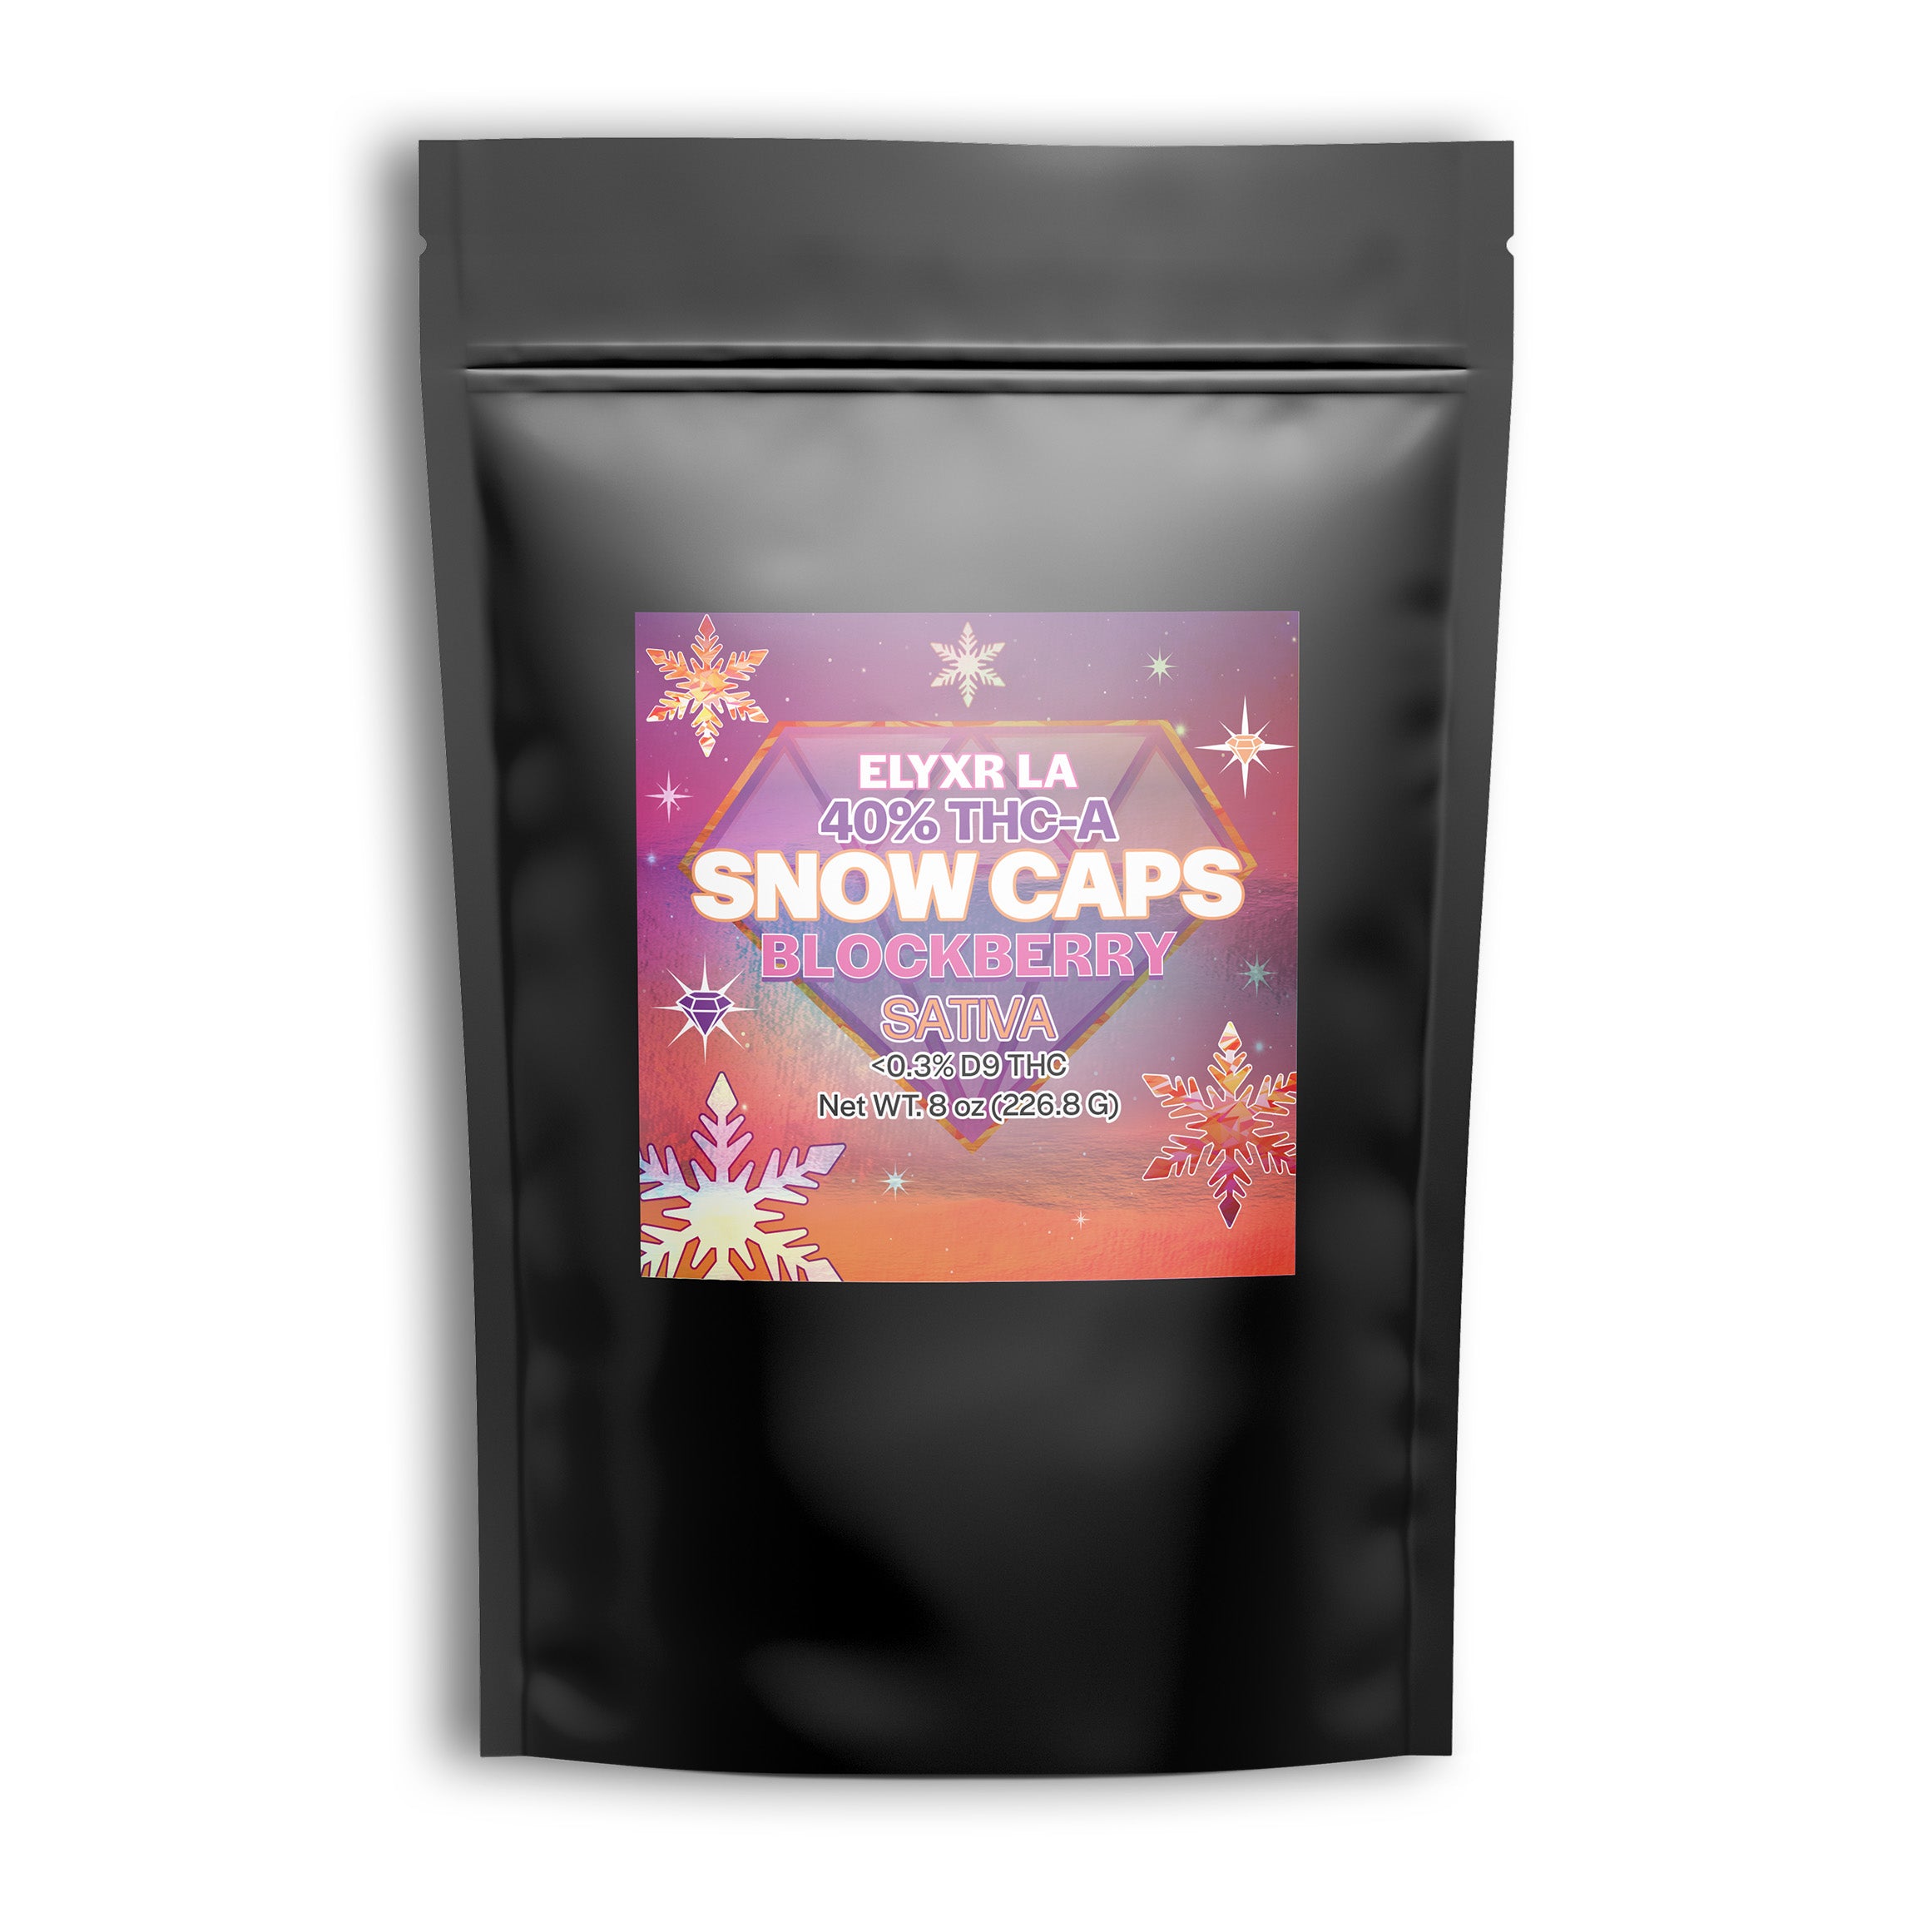 40% THC-A Snow Caps